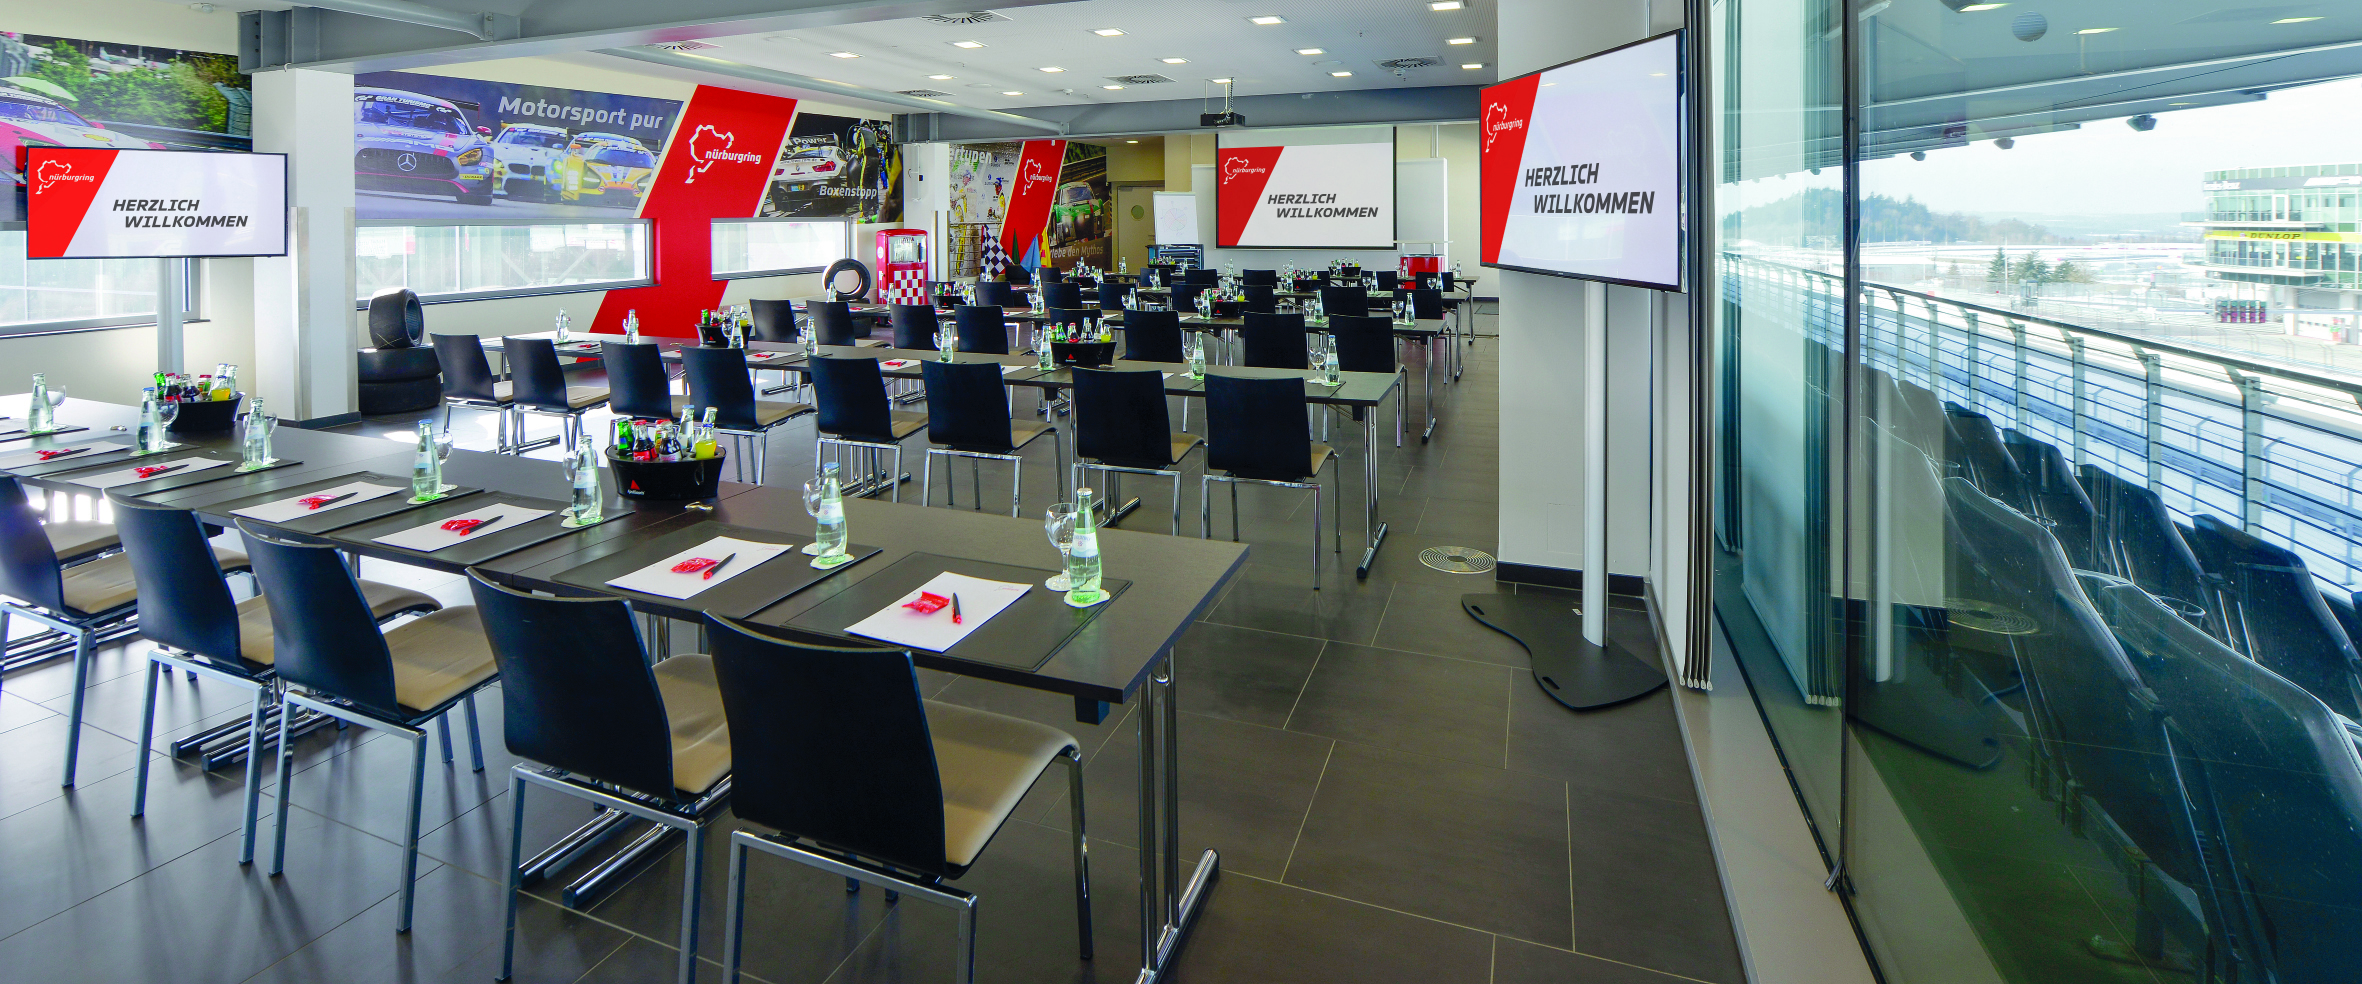 Neuer Namenspartner am Nürburgring: VIP-Bereich heißt jetzt Coca-Cola business°lounge